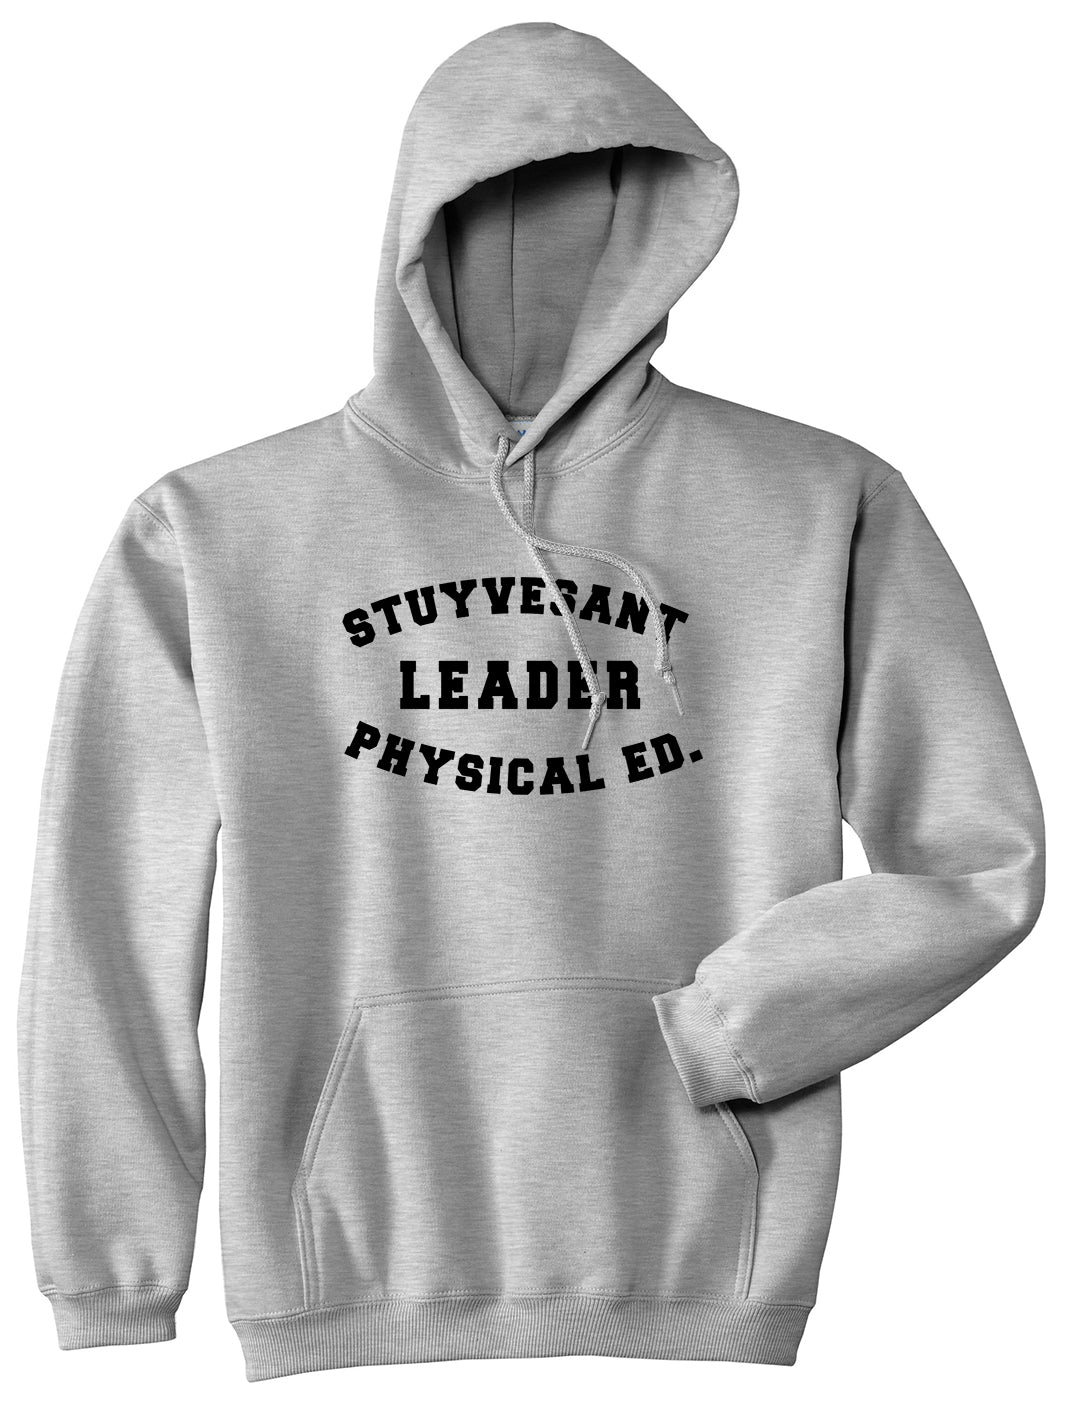 Stuyvesant Leader Physical Ed Mens Pullover Hoodie Grey